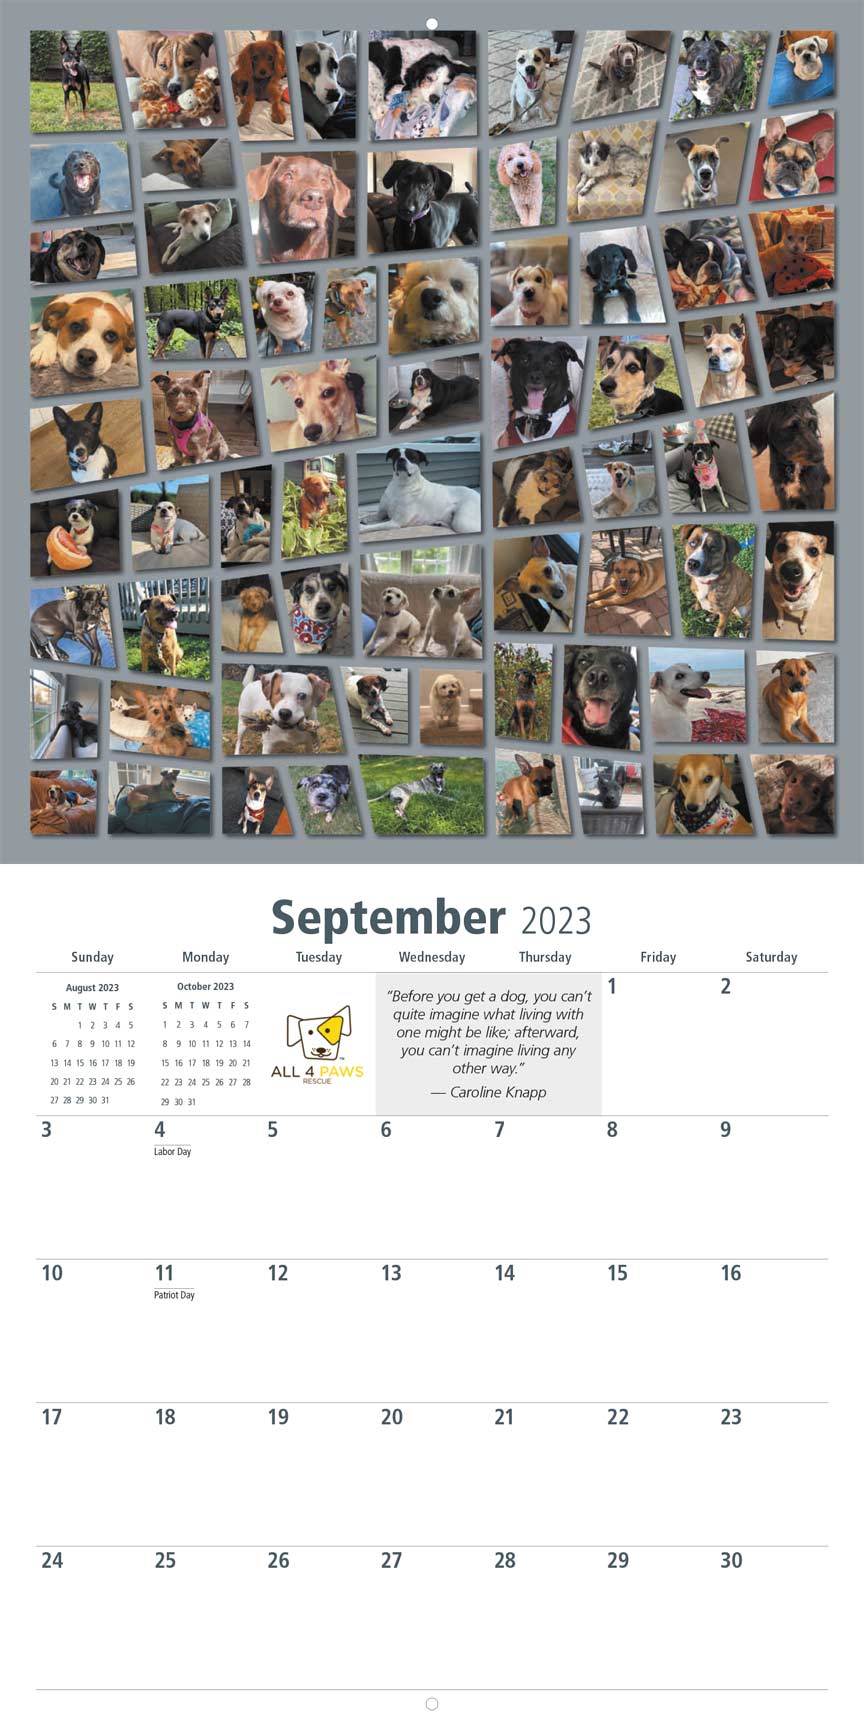 All 4 Paws Rescue 2023 Calendar Fundraising